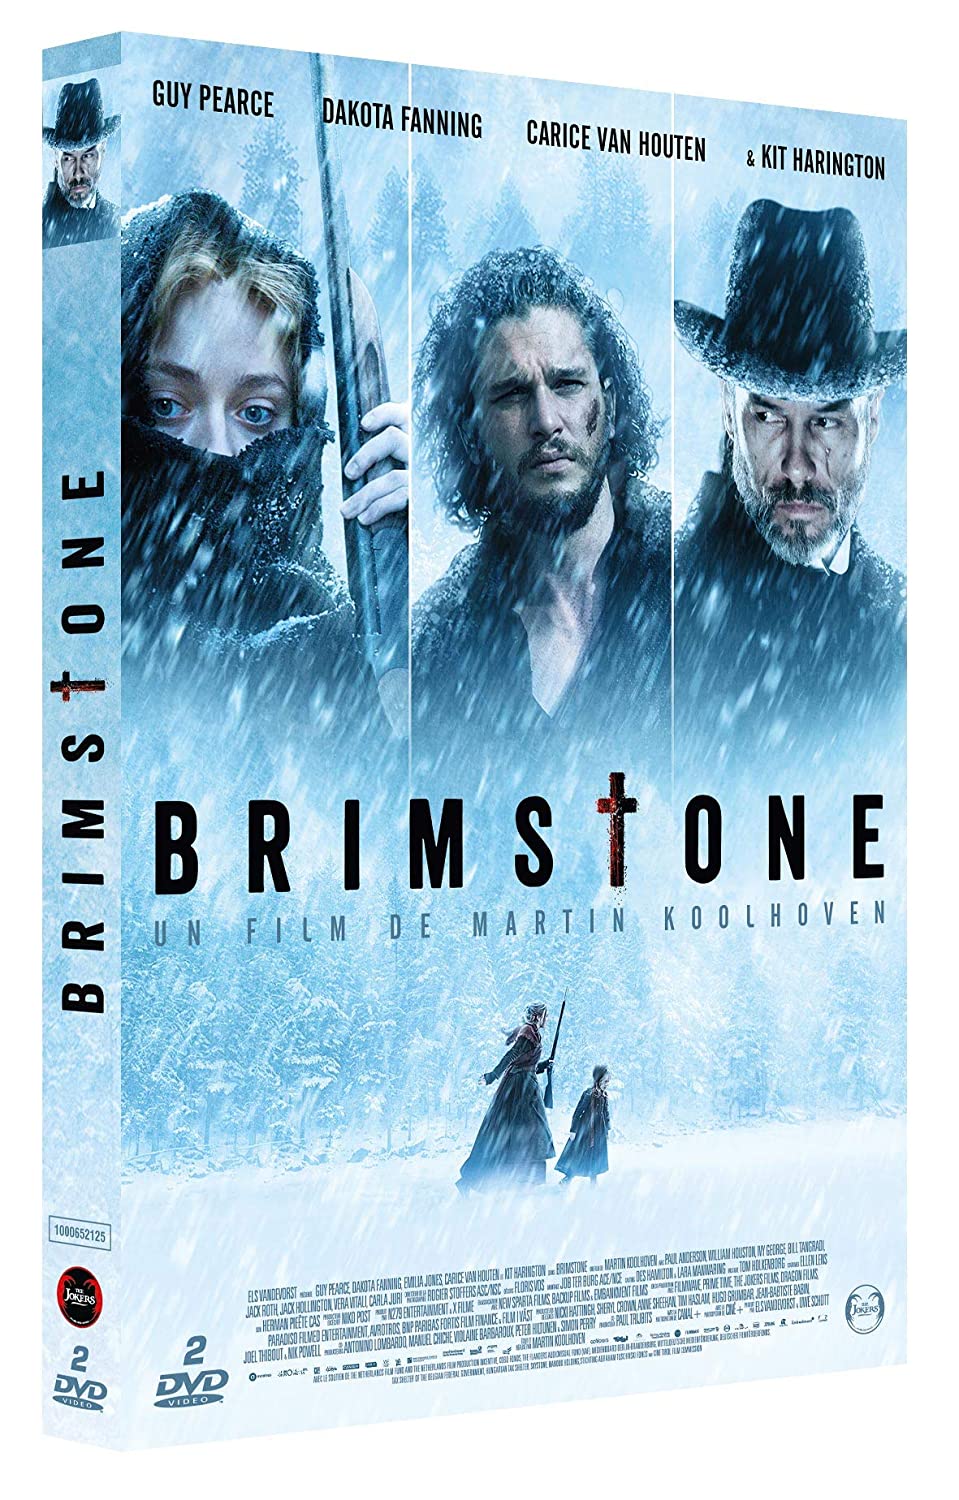 Edition 2 DVD "Brimstone"